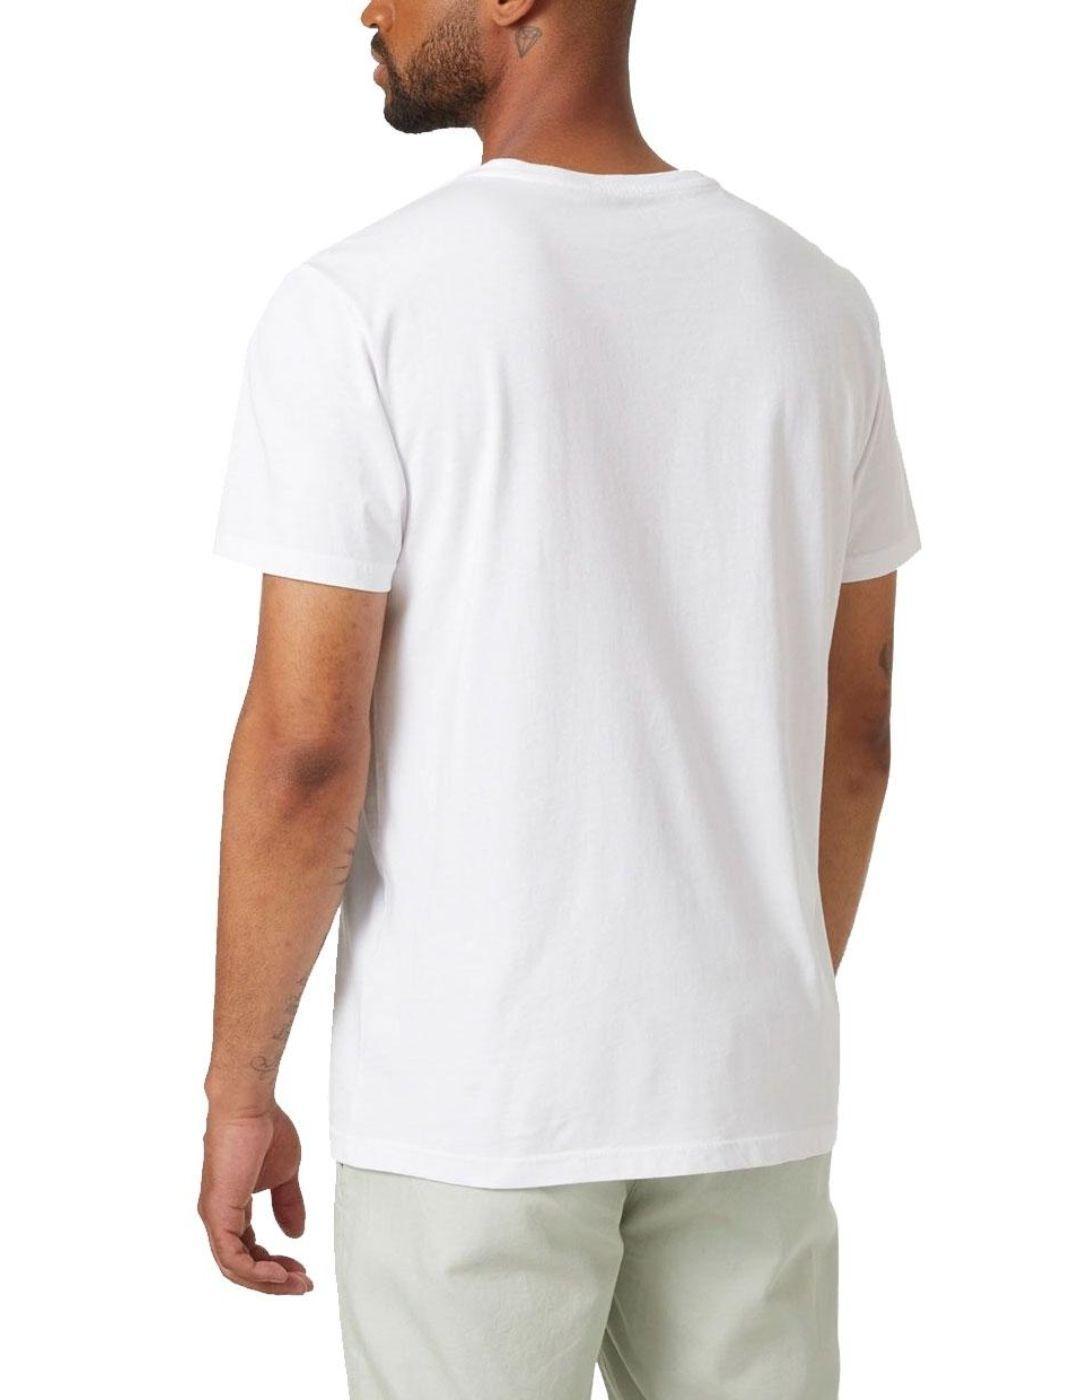 Camiseta Helly Hansen Shoreline blanca hombre -a